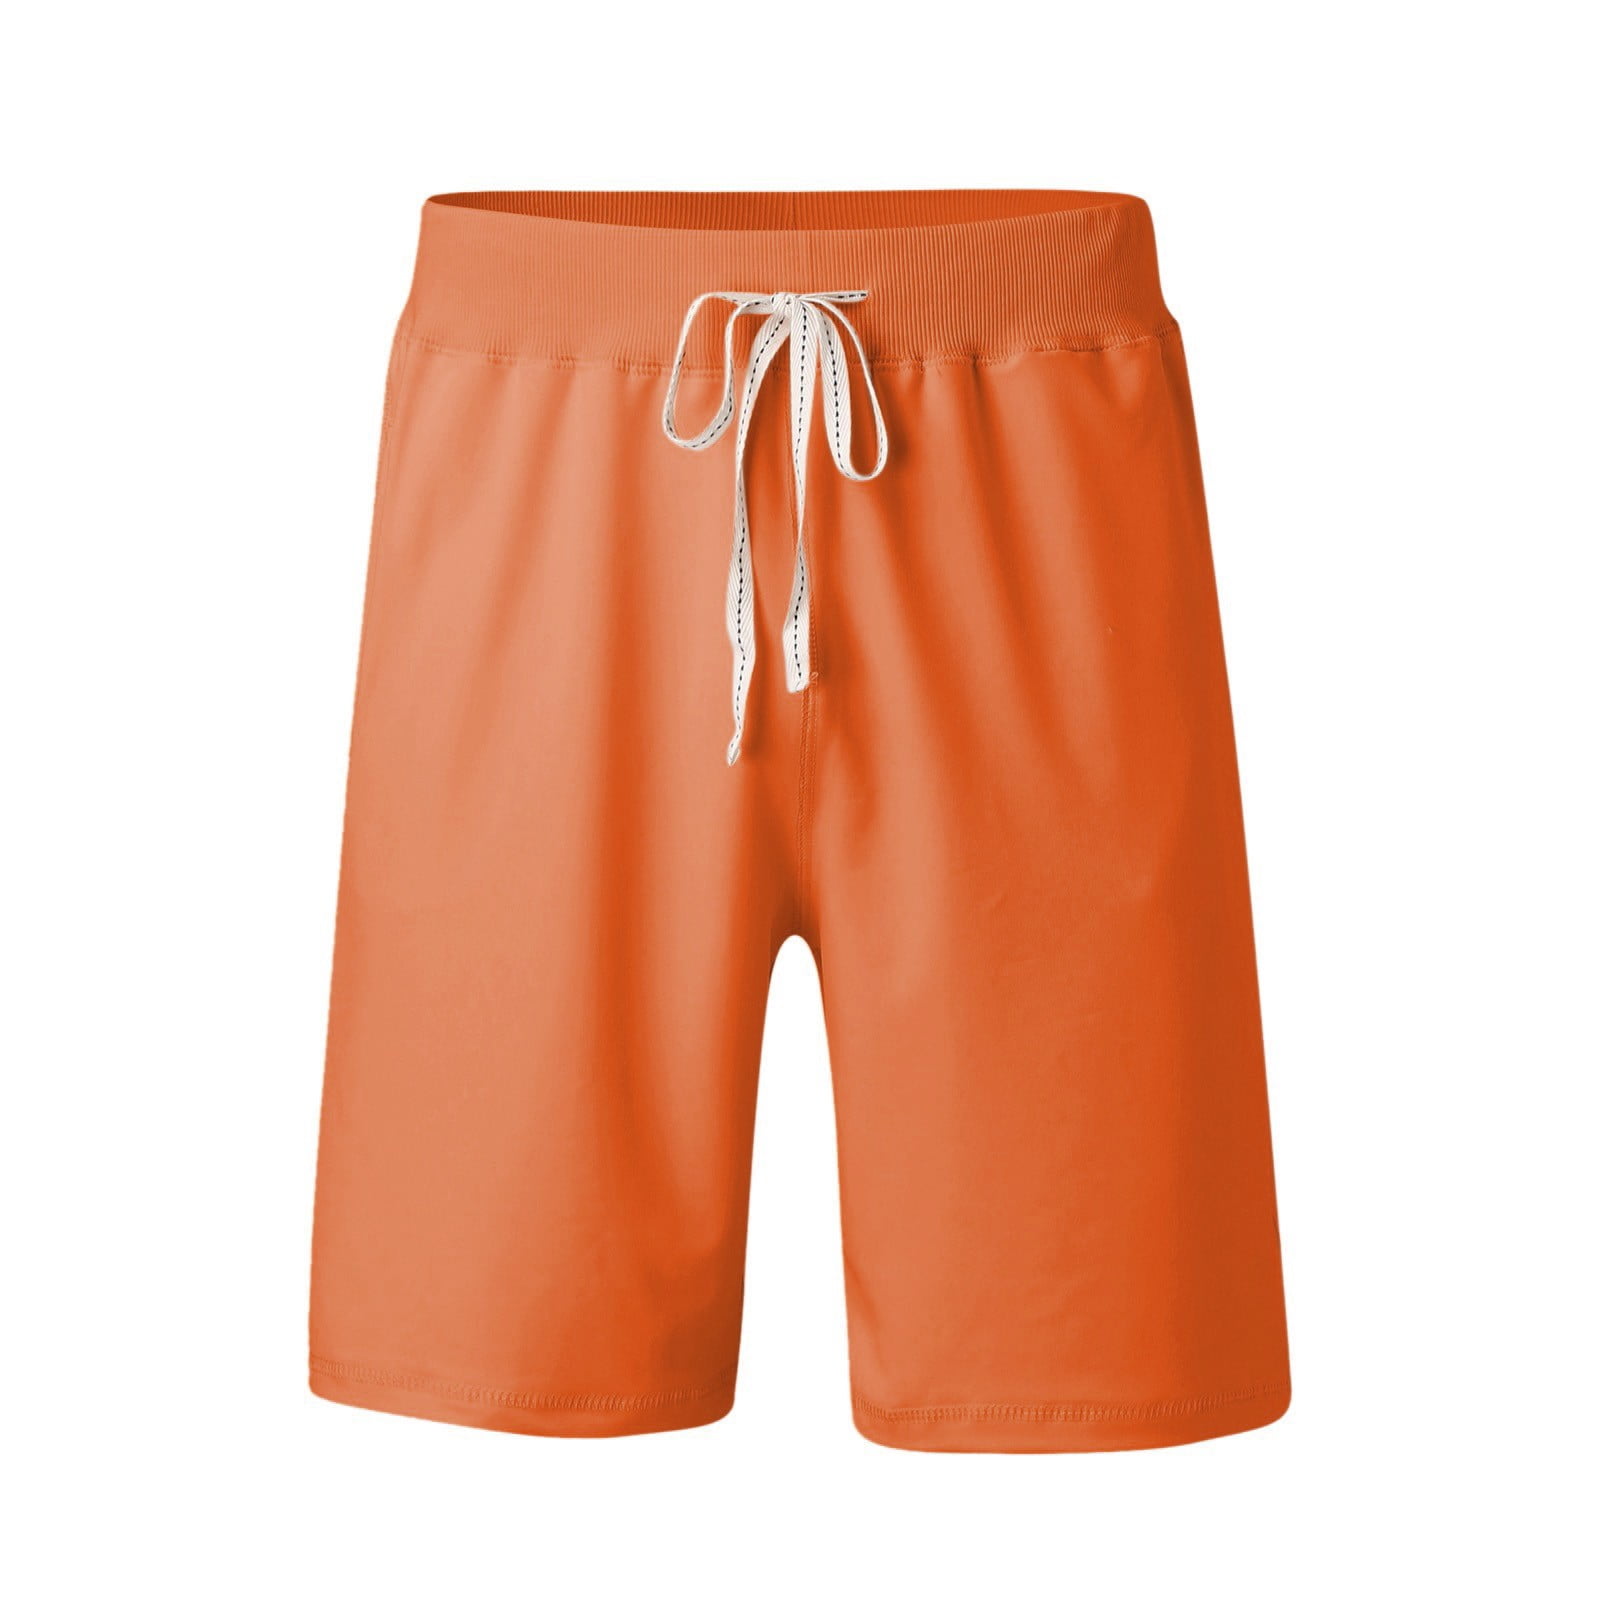 KaLI_store Mens Cargo Shorts Men's Hiking Cargo Shorts Quick Dry ...